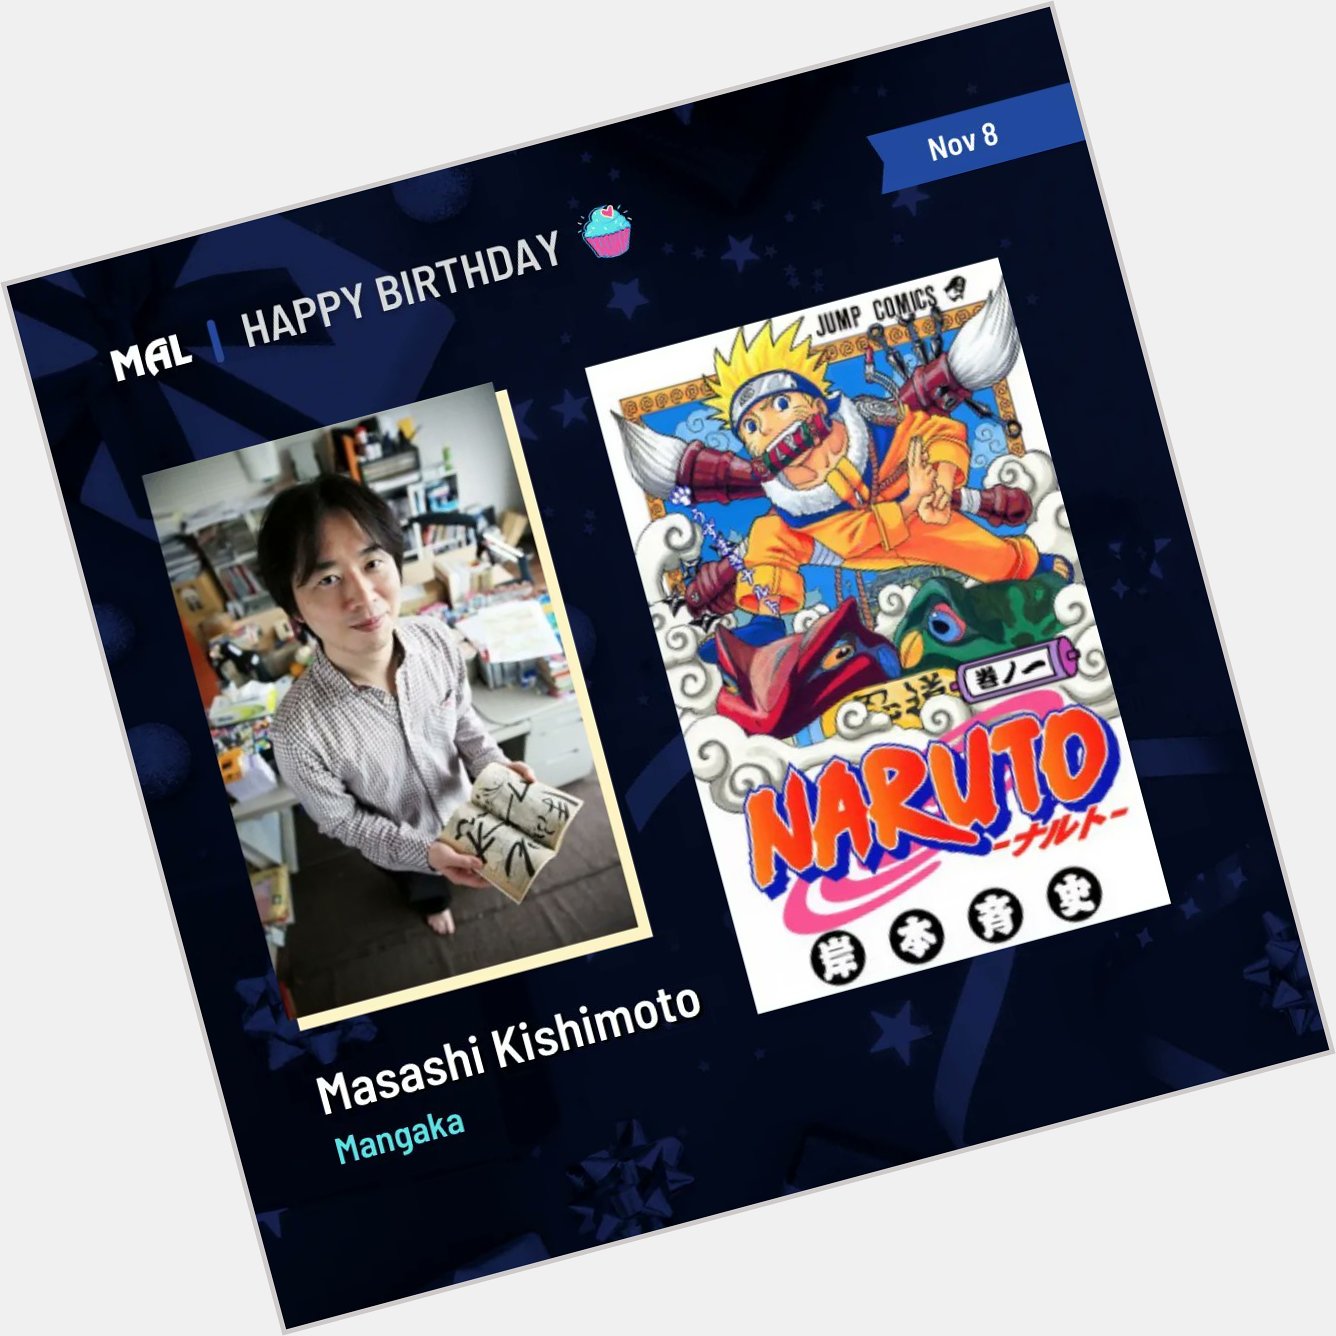 Happy birthday to Masashi Kishimoto! Full profile:  